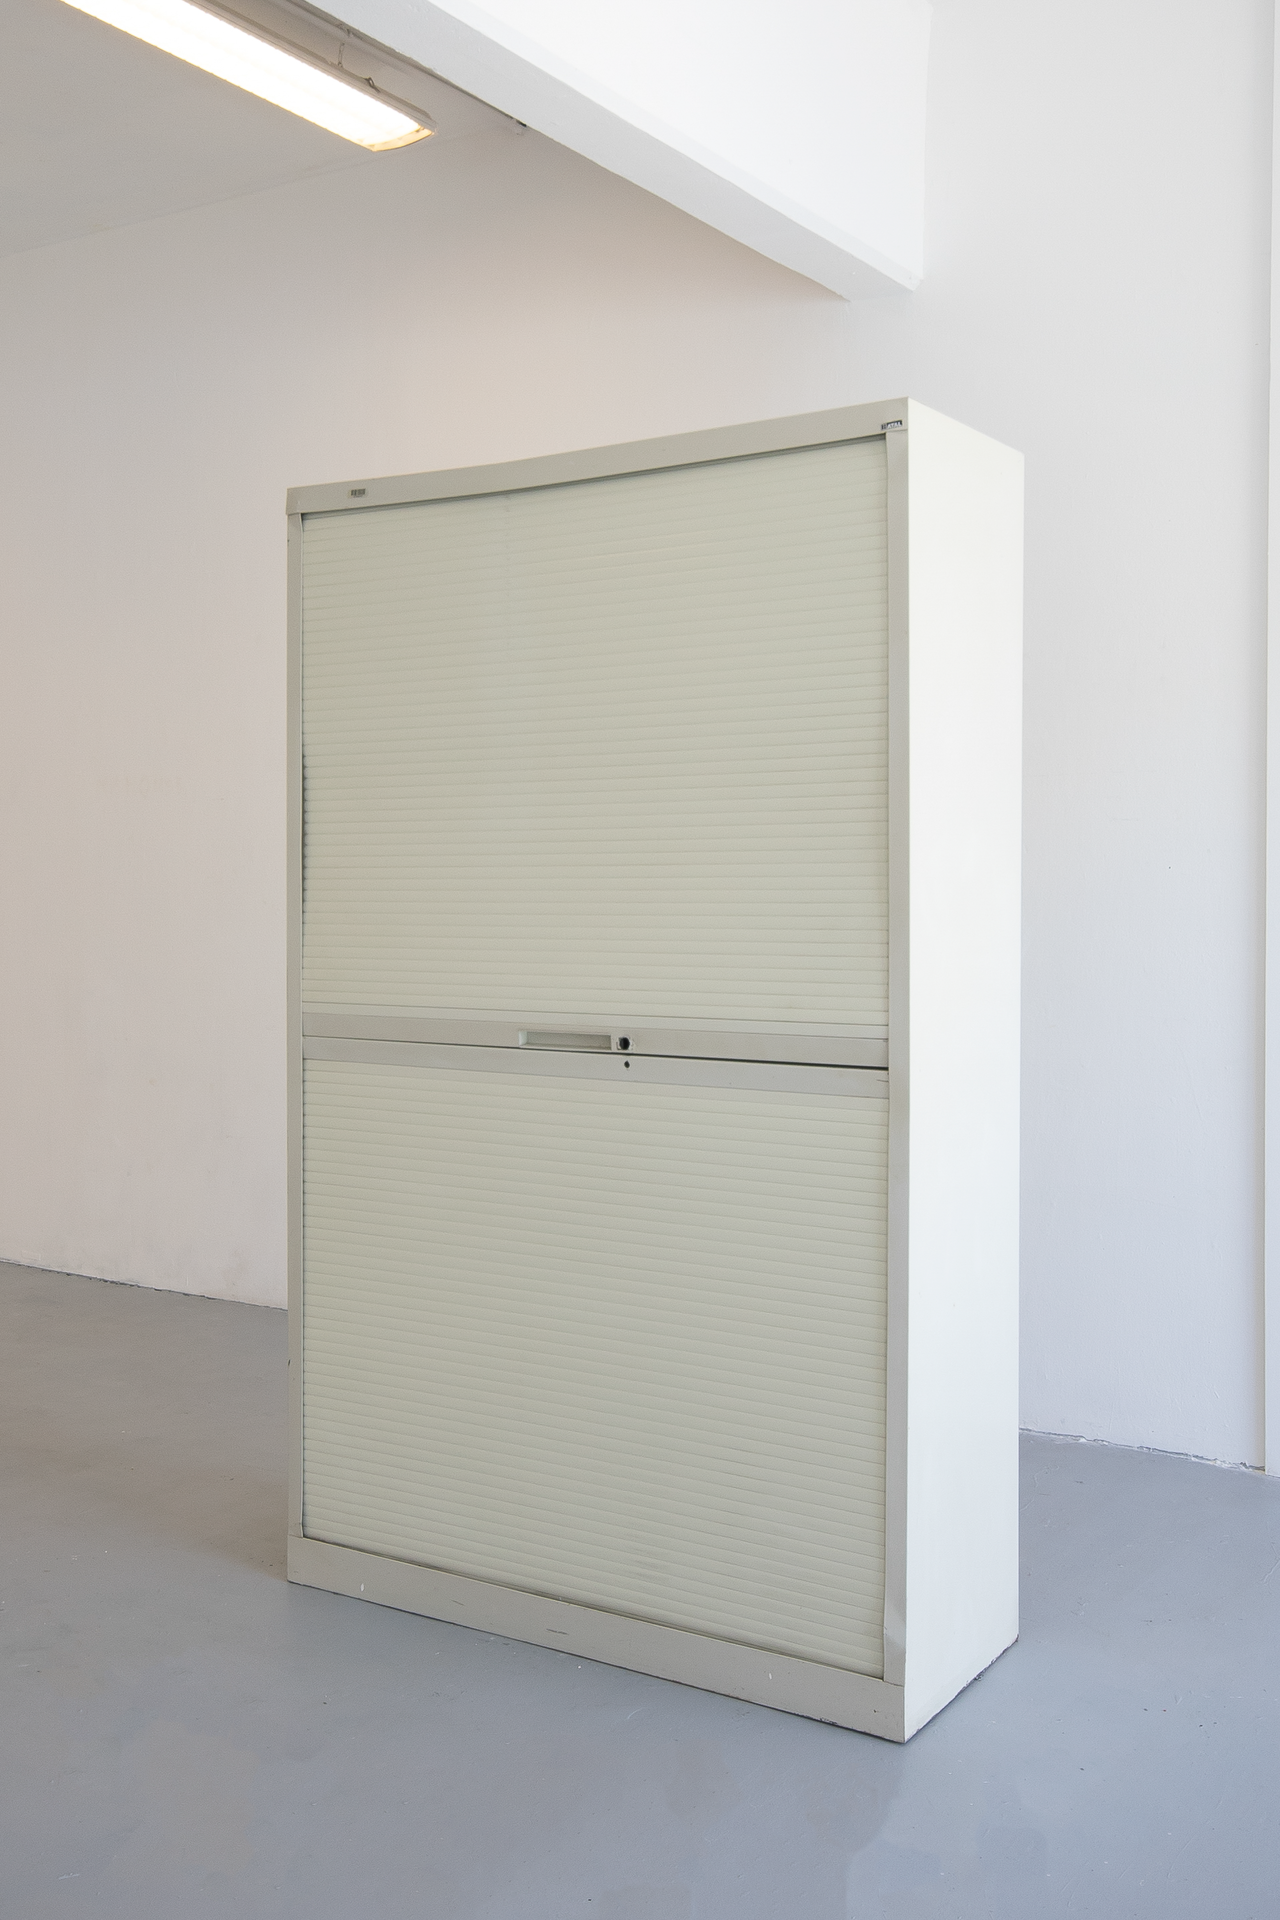 Hugo Bausch Belbachir, Untitled (Cabinet), Metal cabinet, 200 x 121 x 46 cm, 78 3/4 x 47 5/8 x 18 1/8 inches.